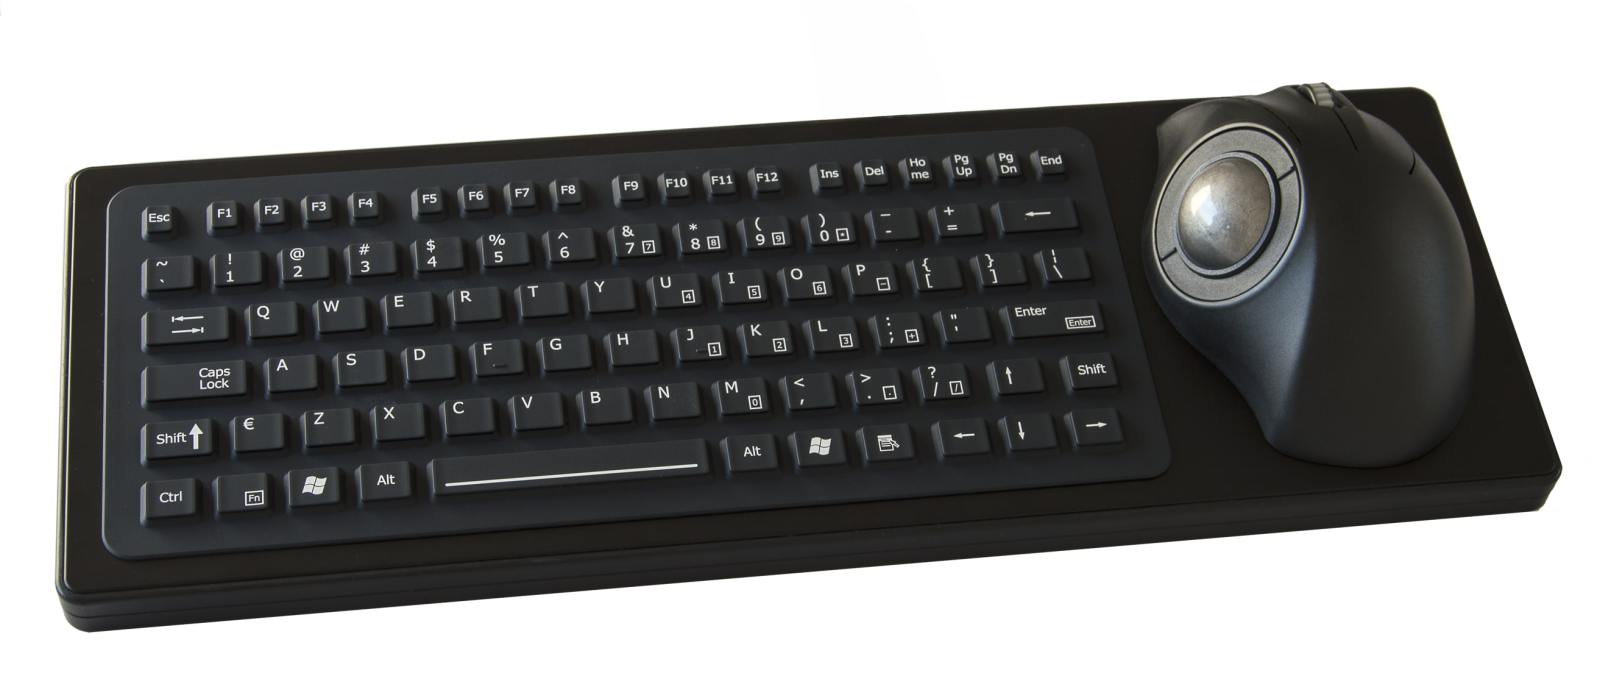 Compact rubber keyboard with ergonomic trackball |